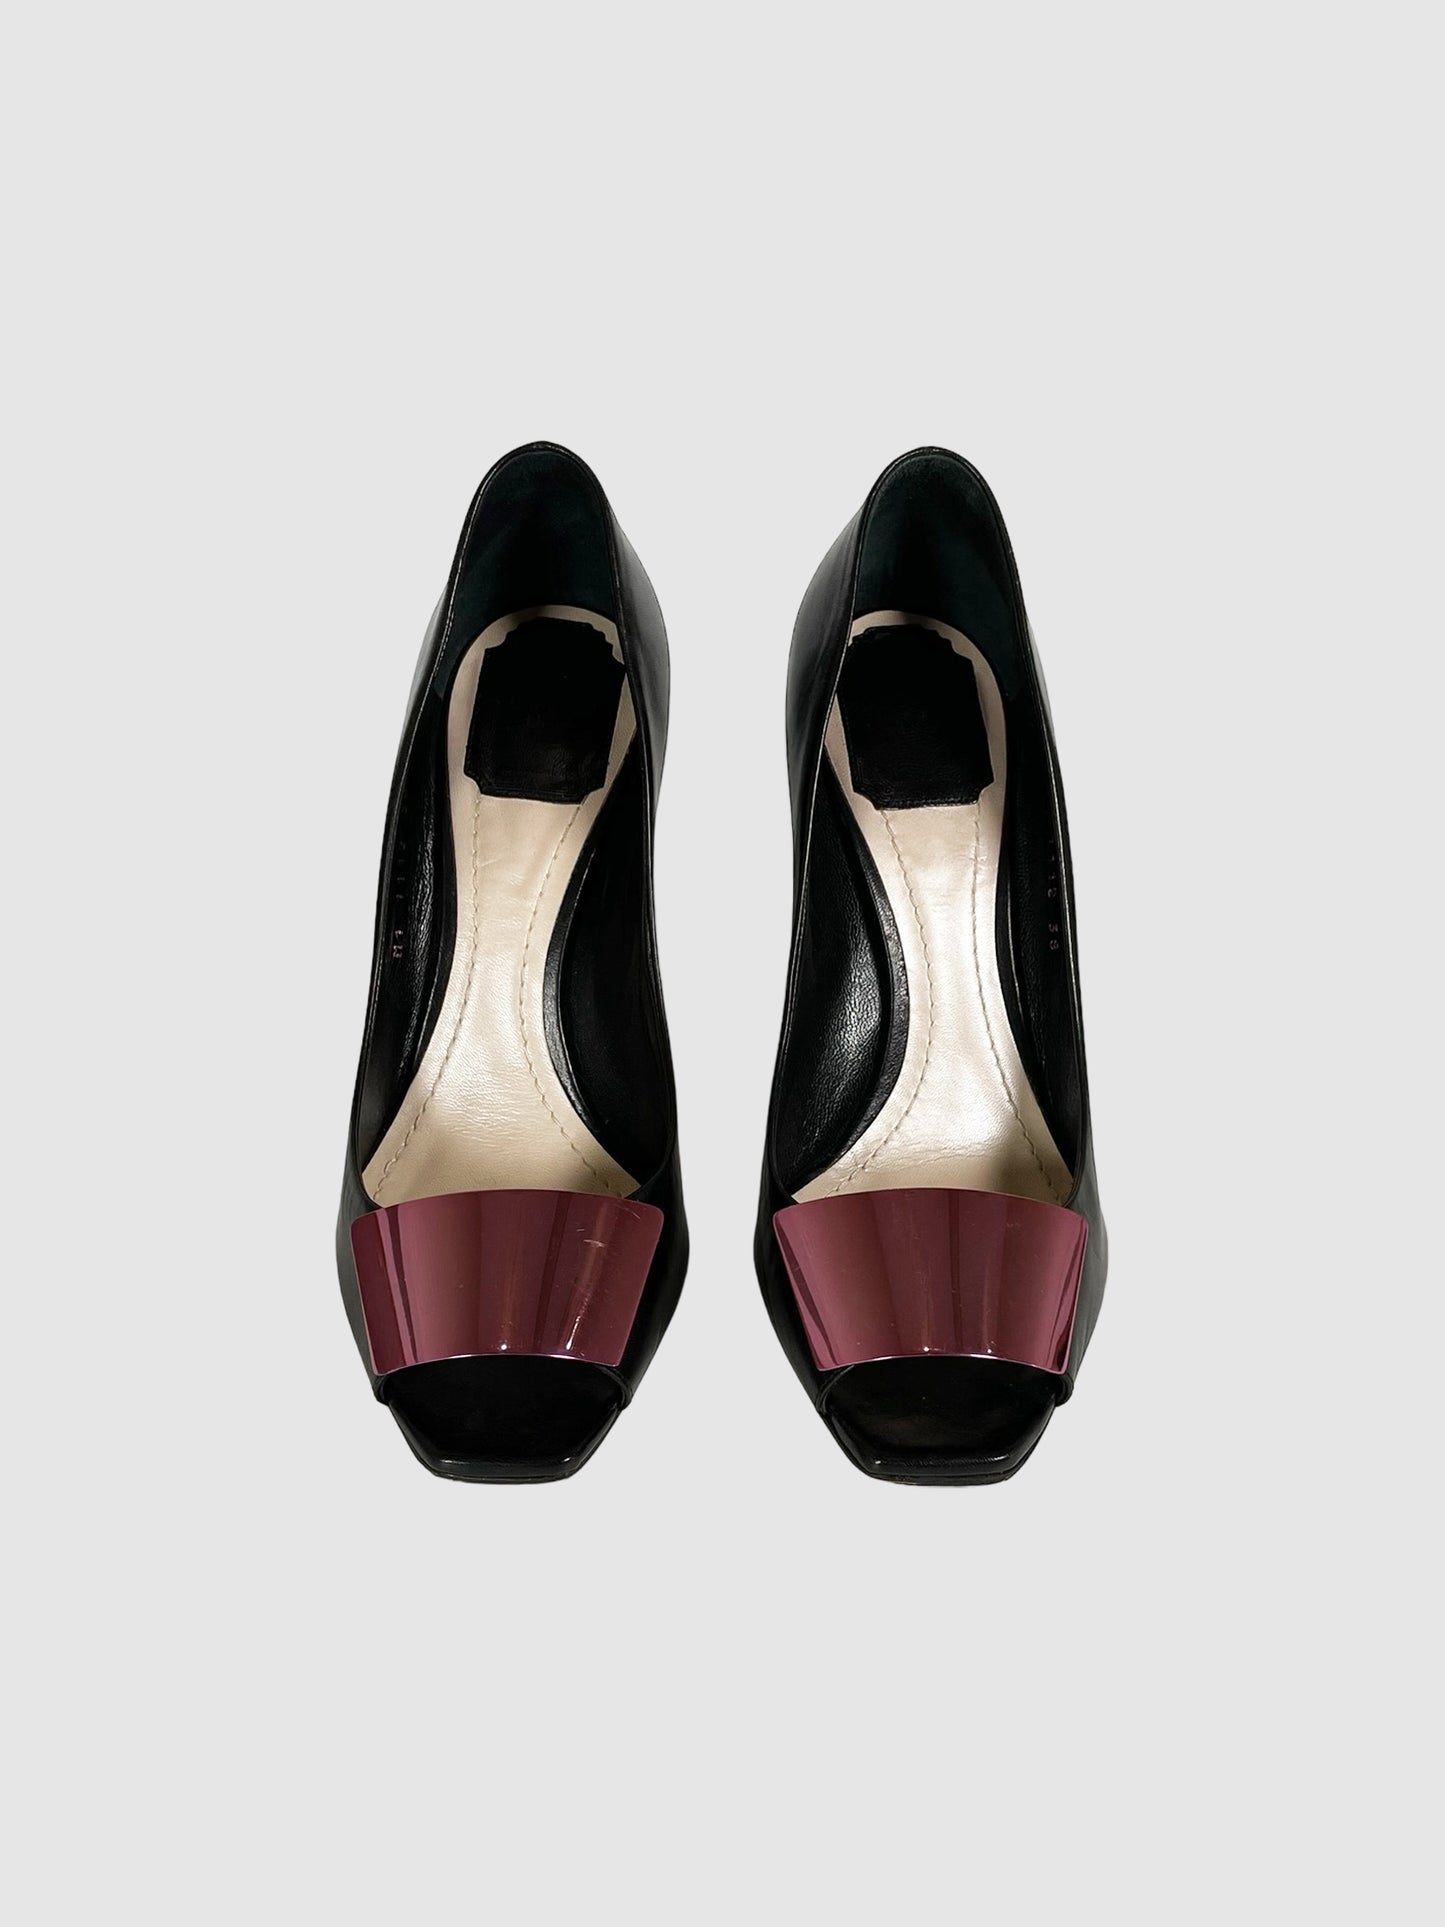 Christian Dior Plaque Peep Toe Pumps - Size 38